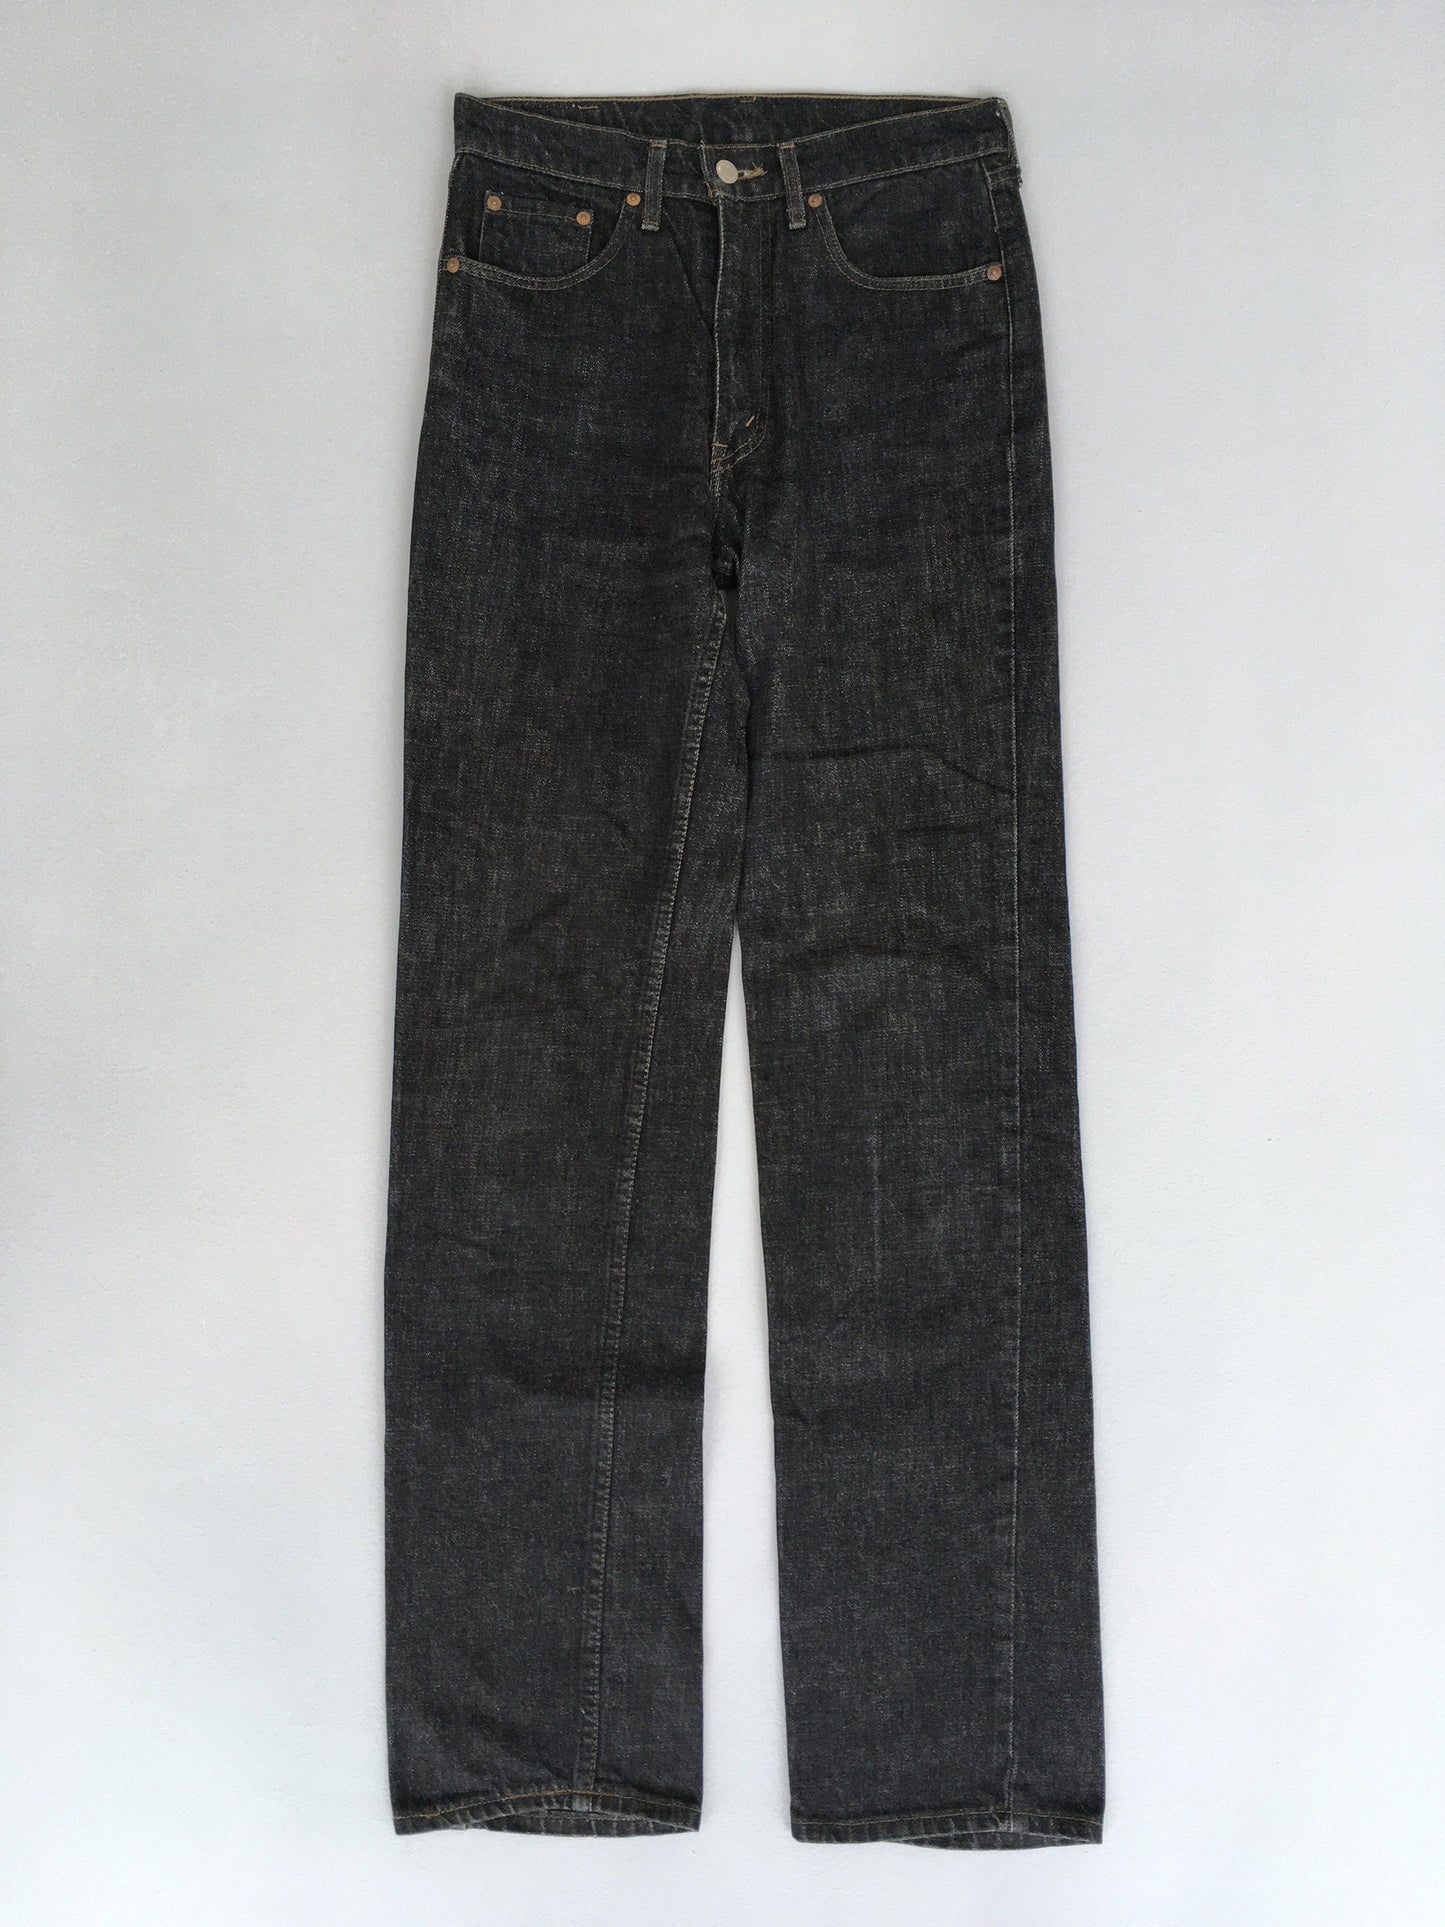 Levi's 503 Dark Black Jeans Size 28x33.5